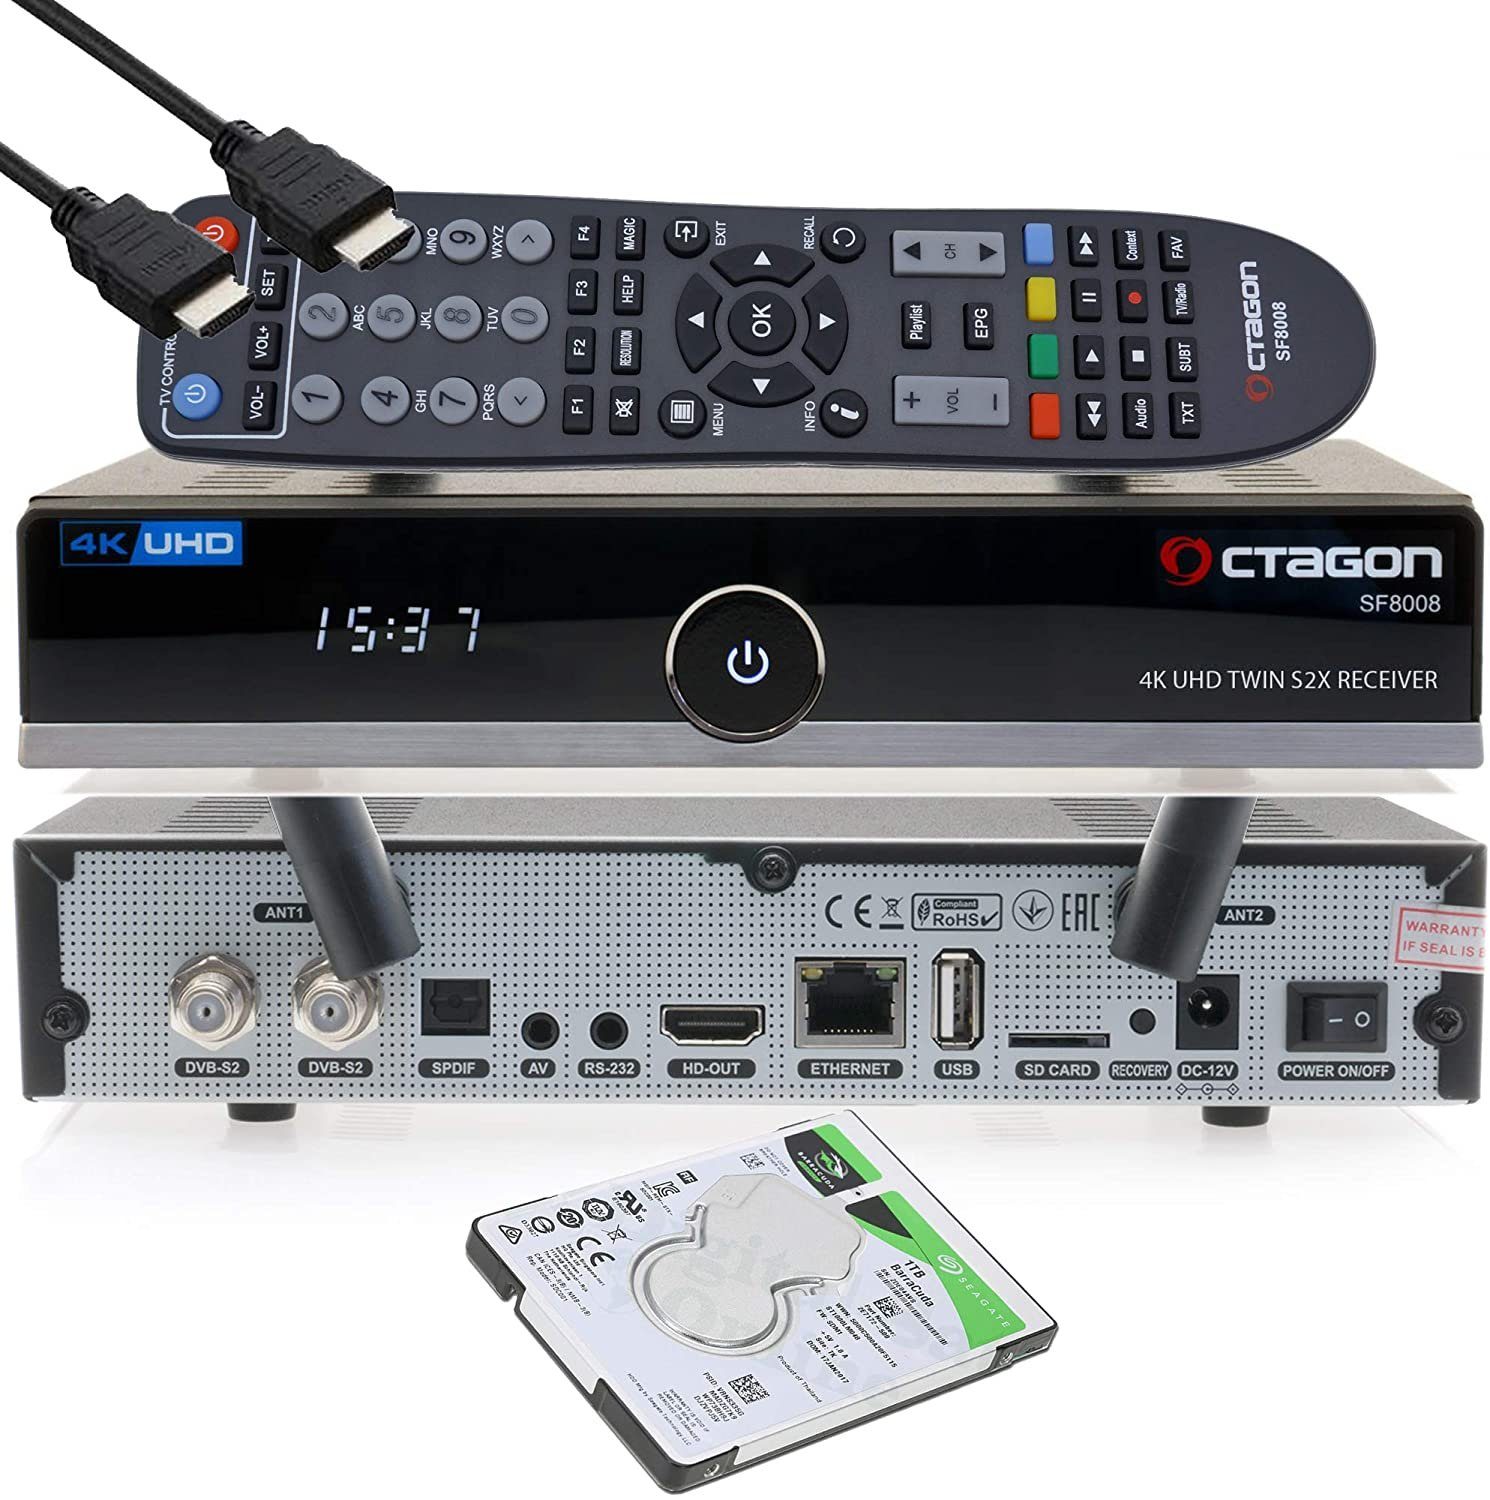 OCTAGON OCTAGON SF8008 4K UHD E2 DVB-S2X Twin + 1TB HDD SAT-Receiver